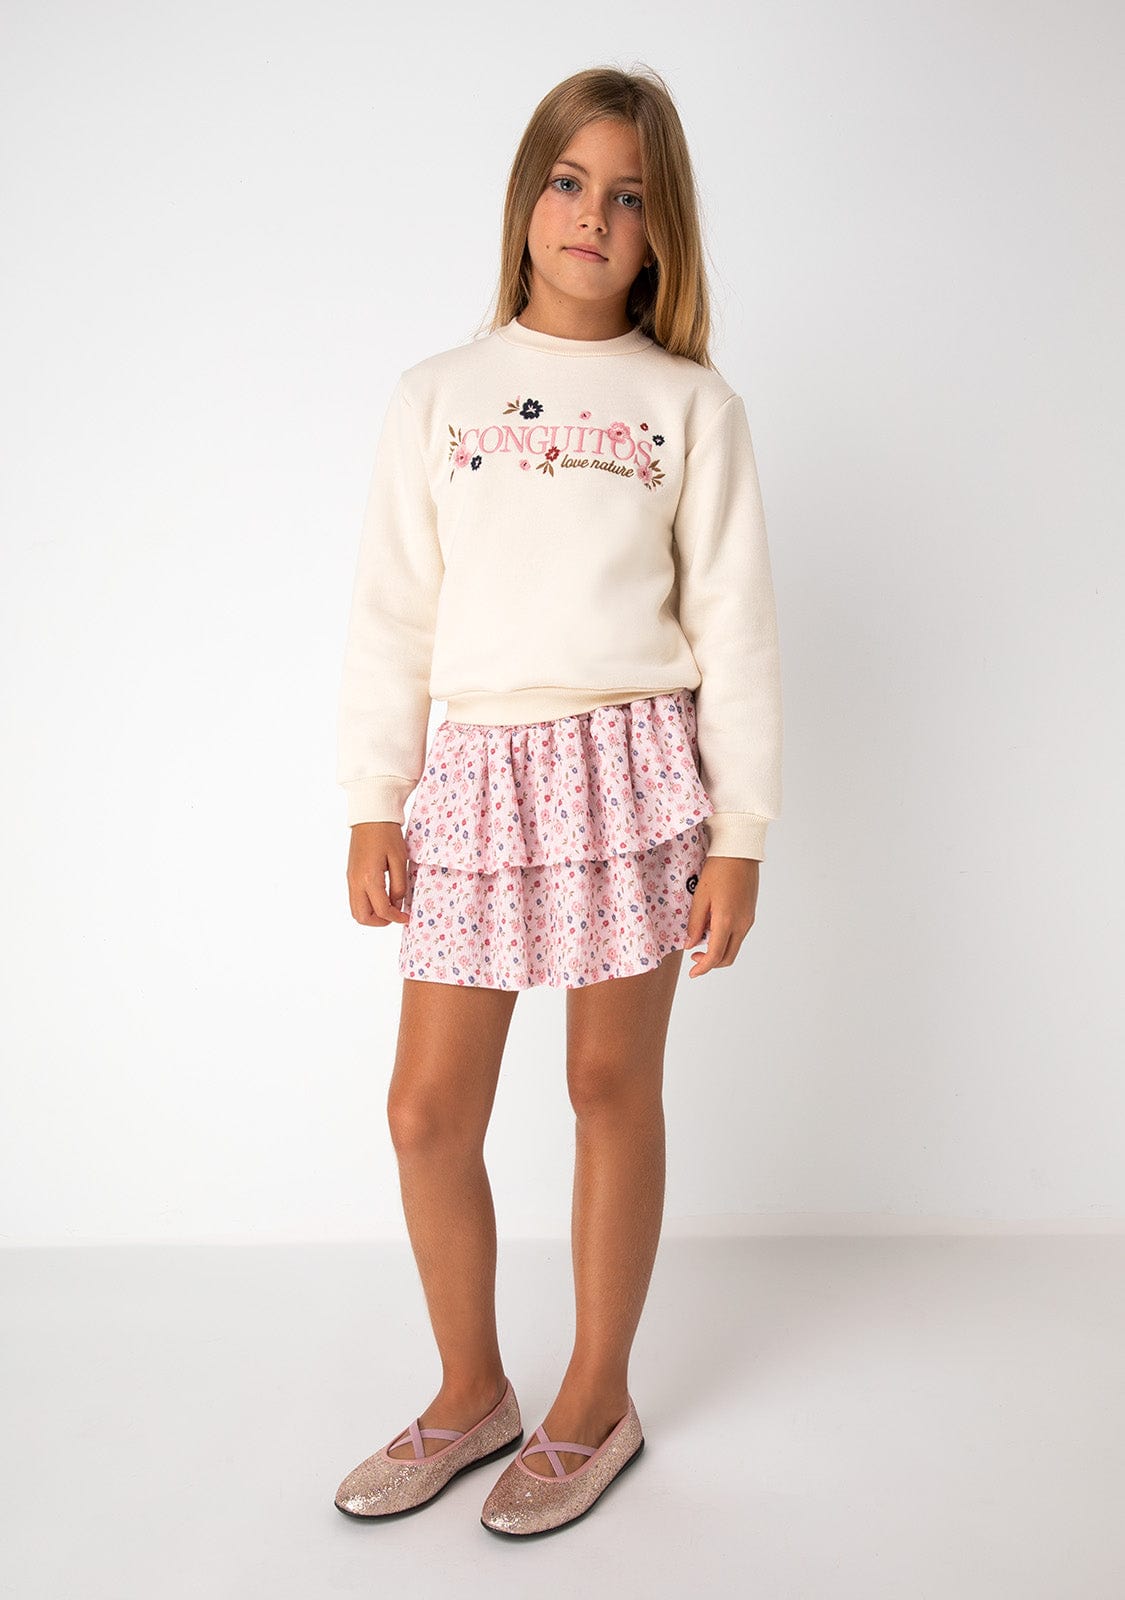 CONGUITOS TEXTIL Clothing Girl's Beige Conguitos Flowers Sweatshirt